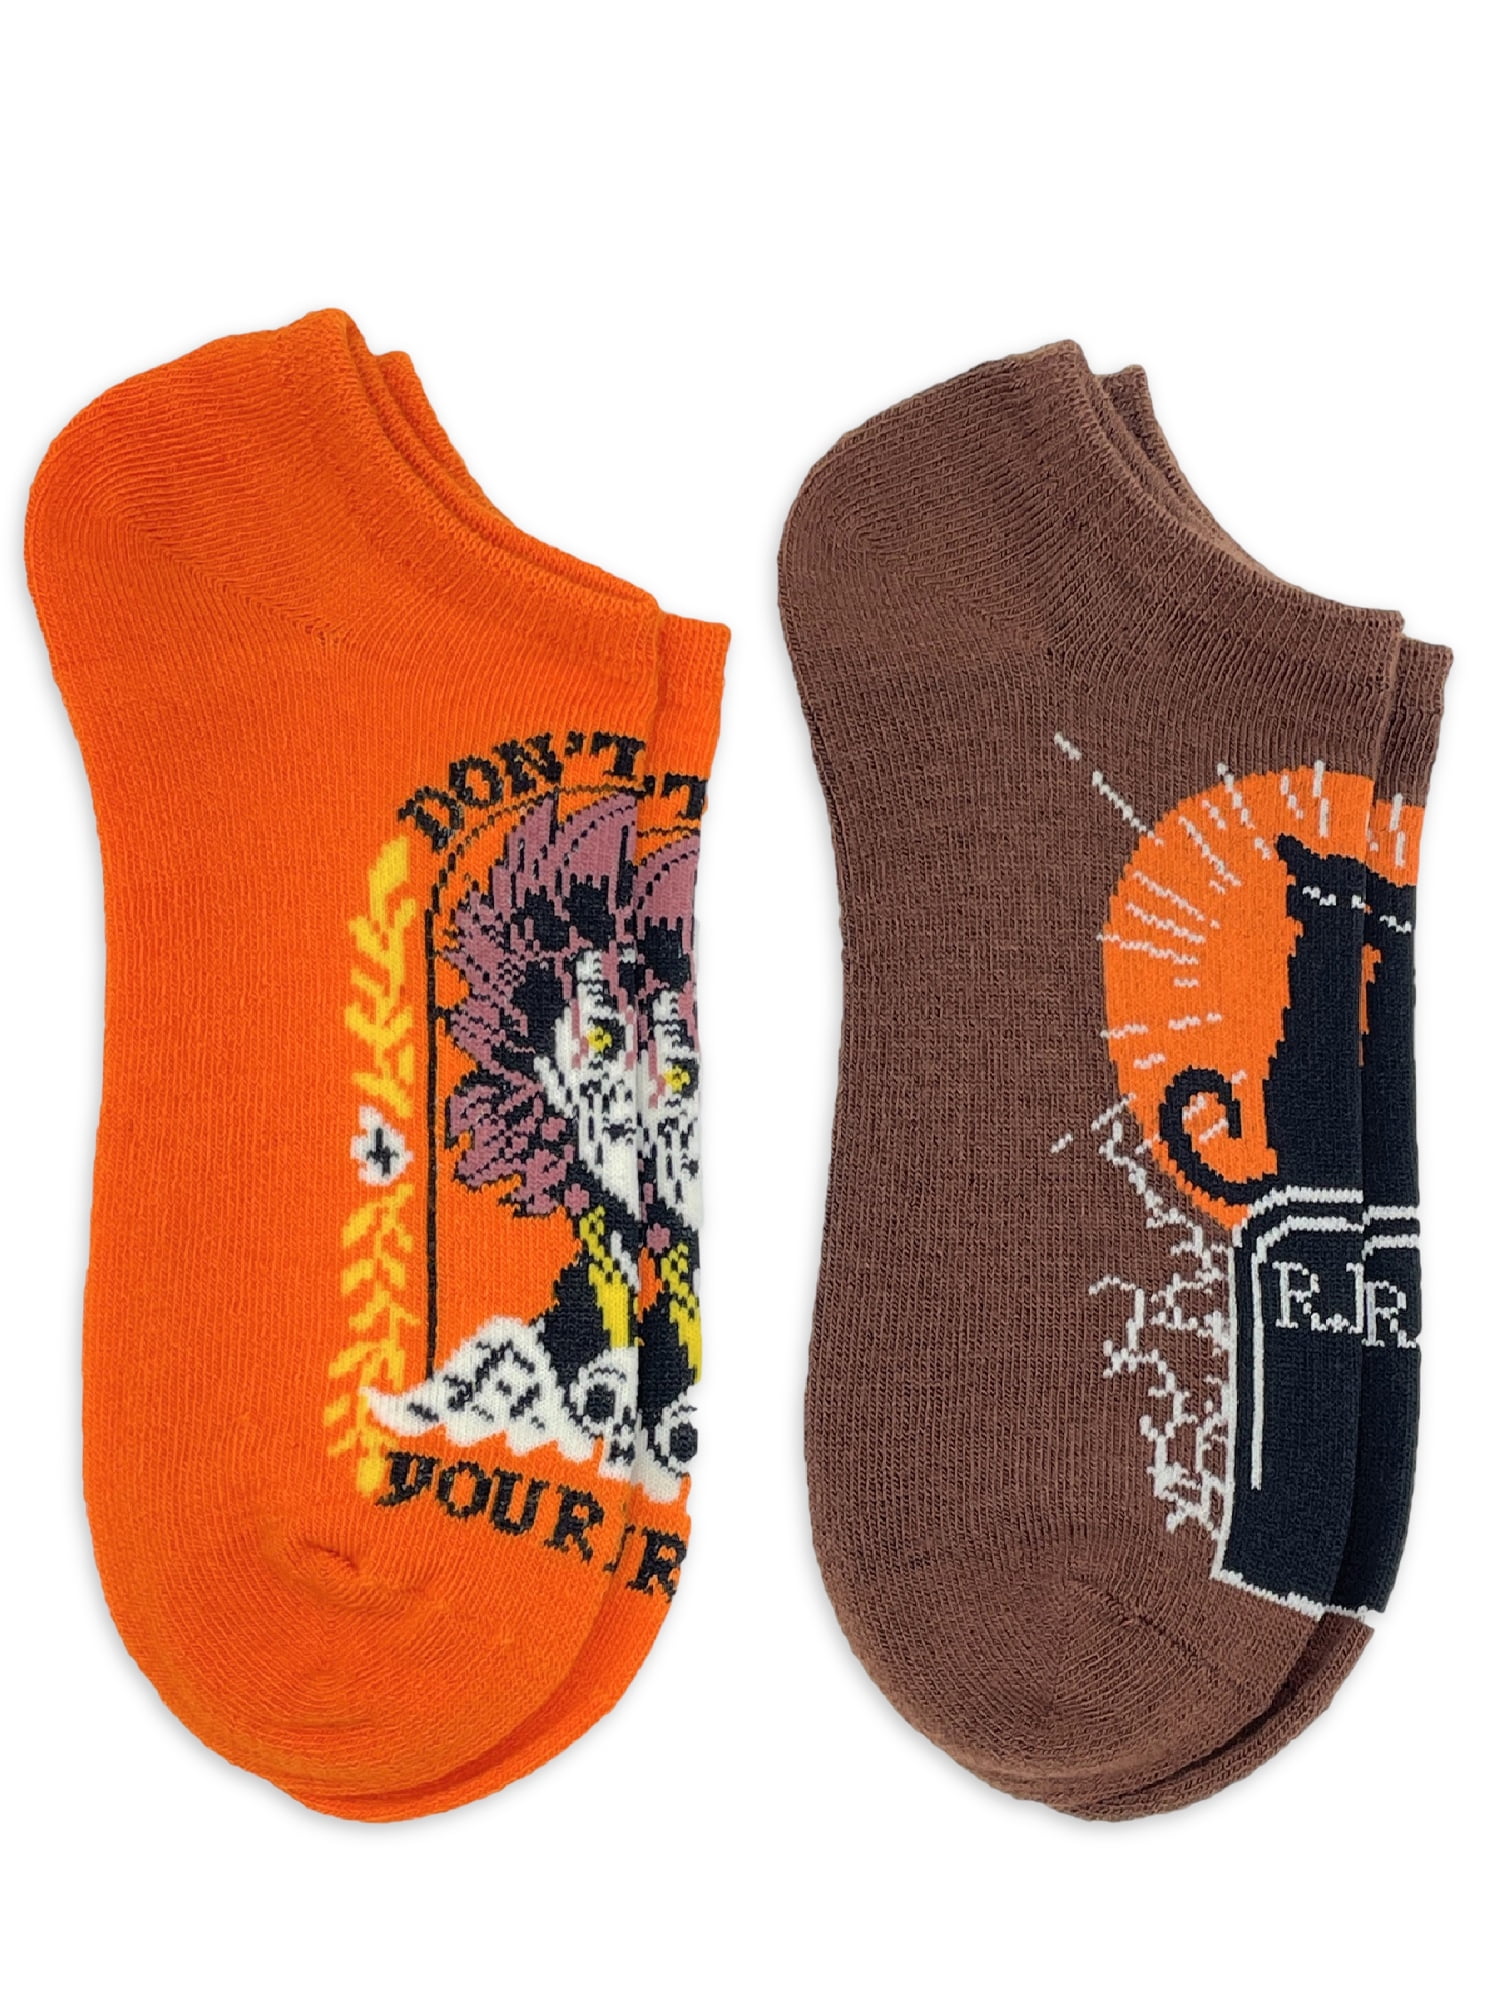 Hocus Pocus Women's Halloween No-Show Socks, 2-Pack, Size 4-10